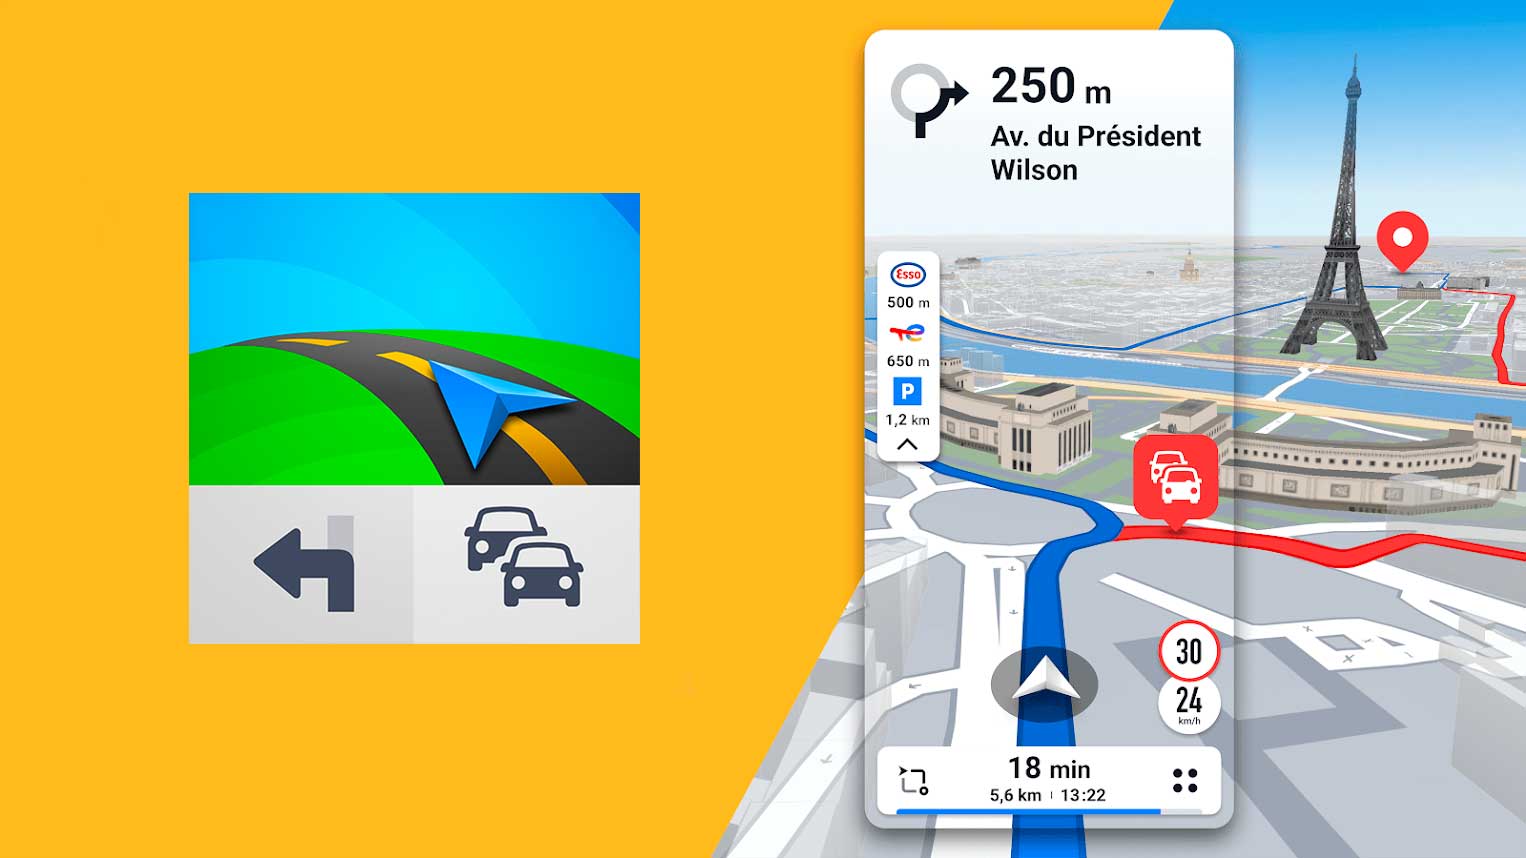 Sygic GPS Navigation & Maps